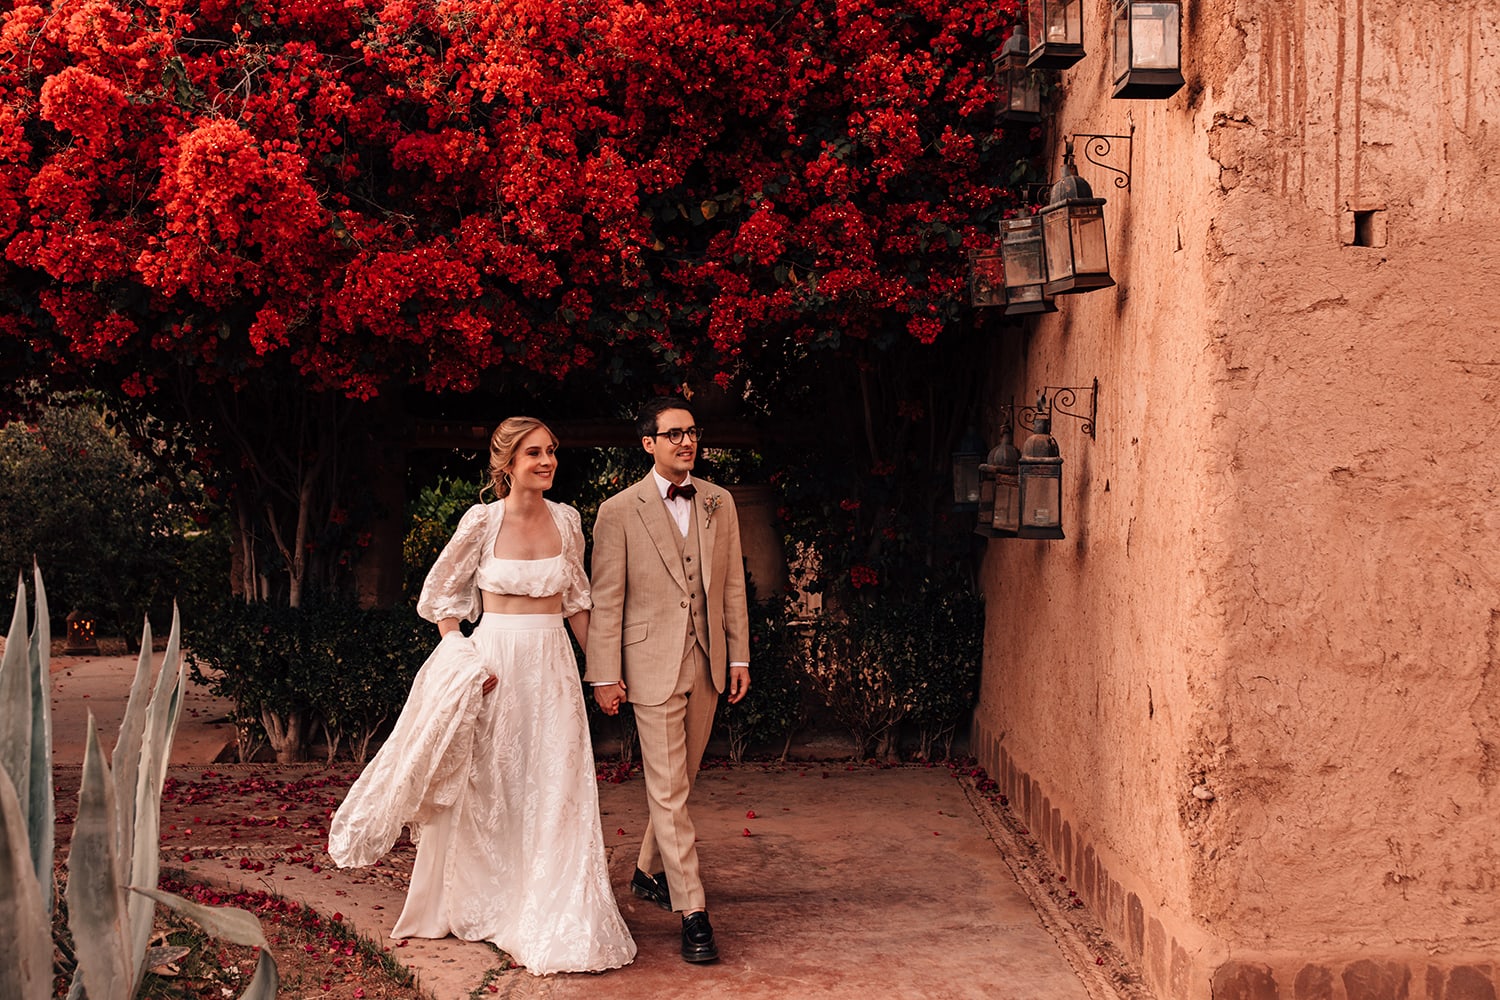 Best of 2022 image taken from a destination wedding in Marrakesh